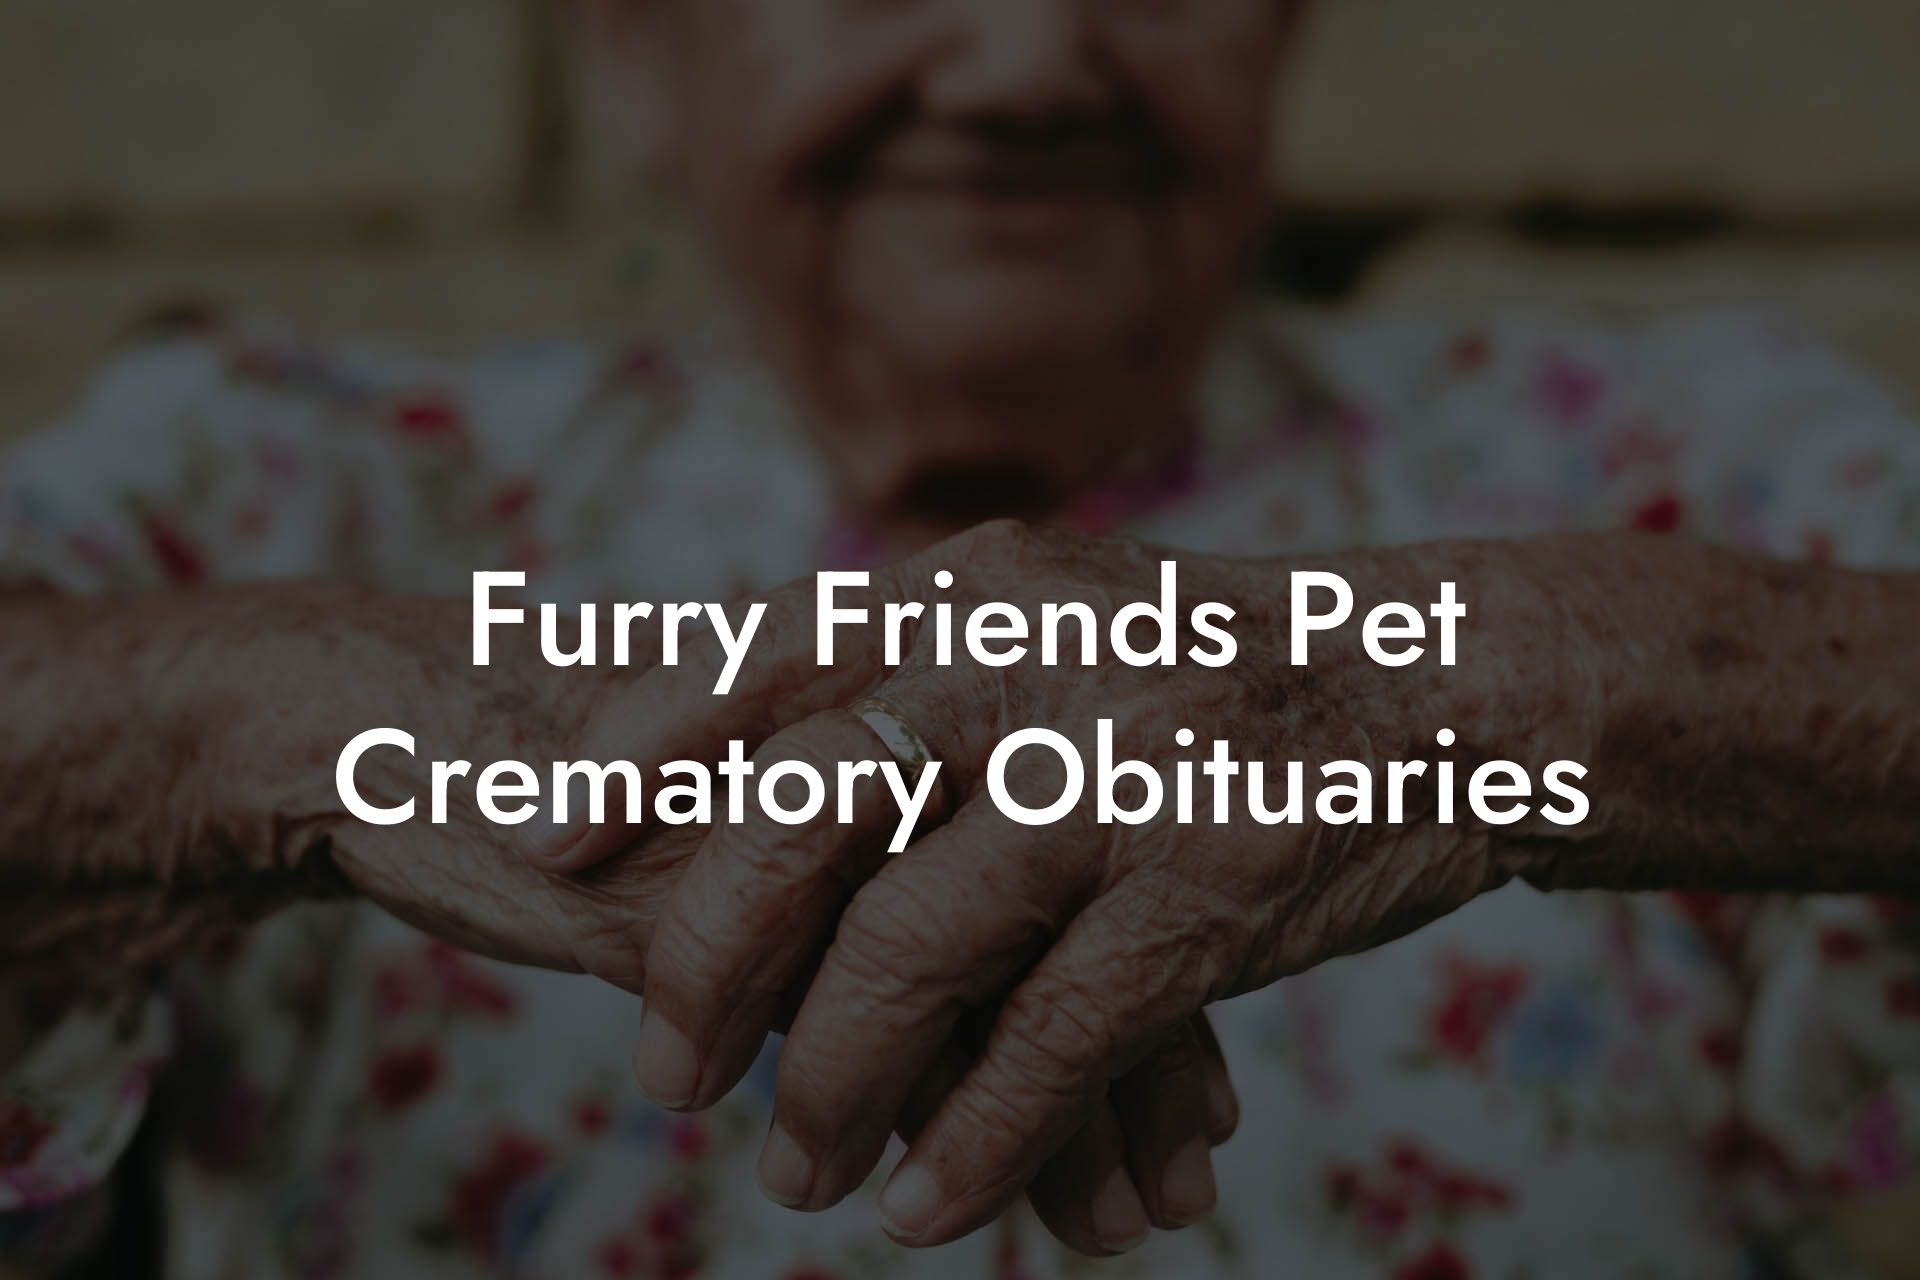 Furry Friends Pet Crematory Obituaries